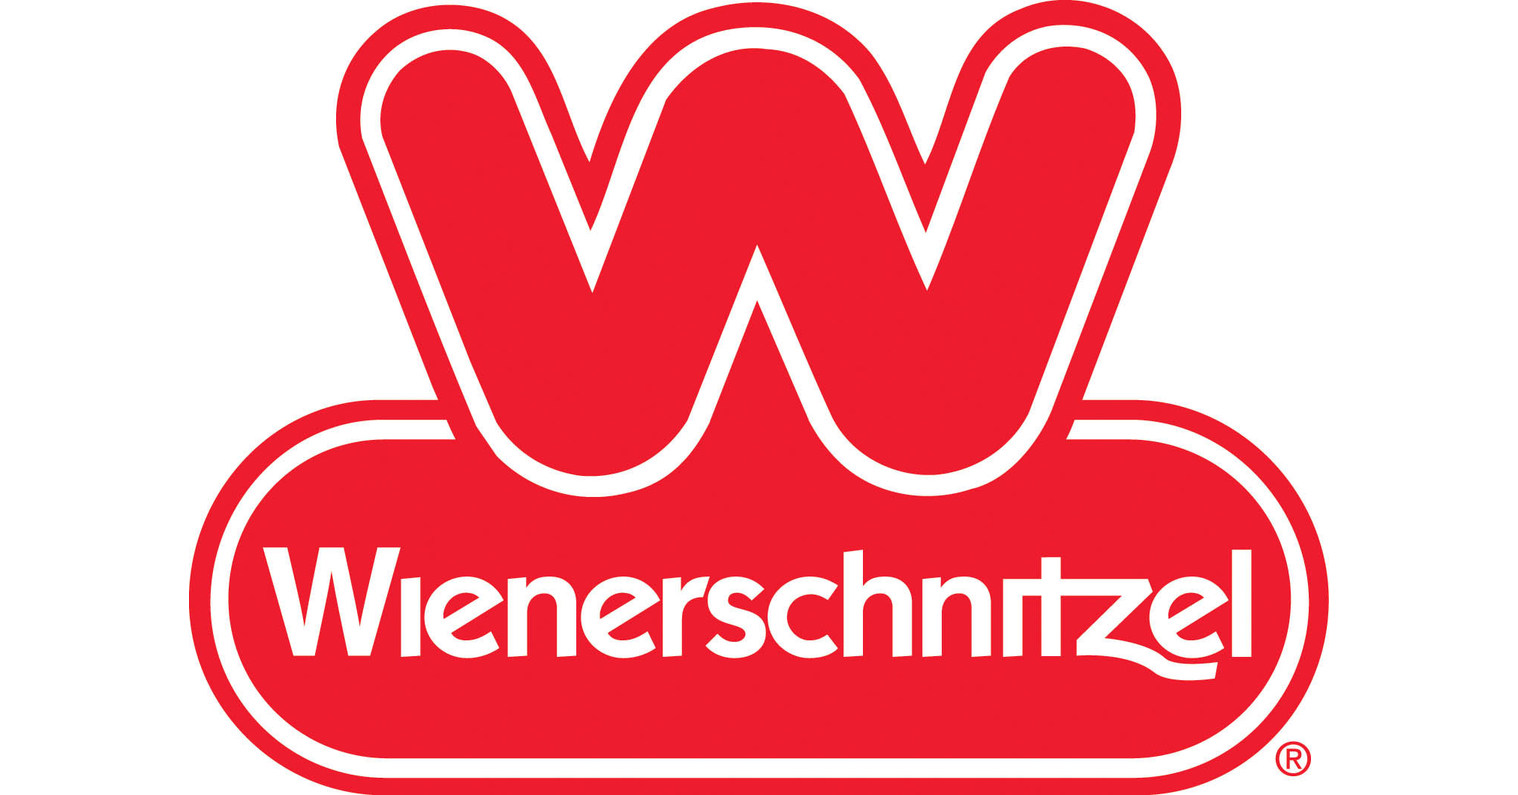 In Appreciation for their Service, Wienerschnitzel Offers Veterans